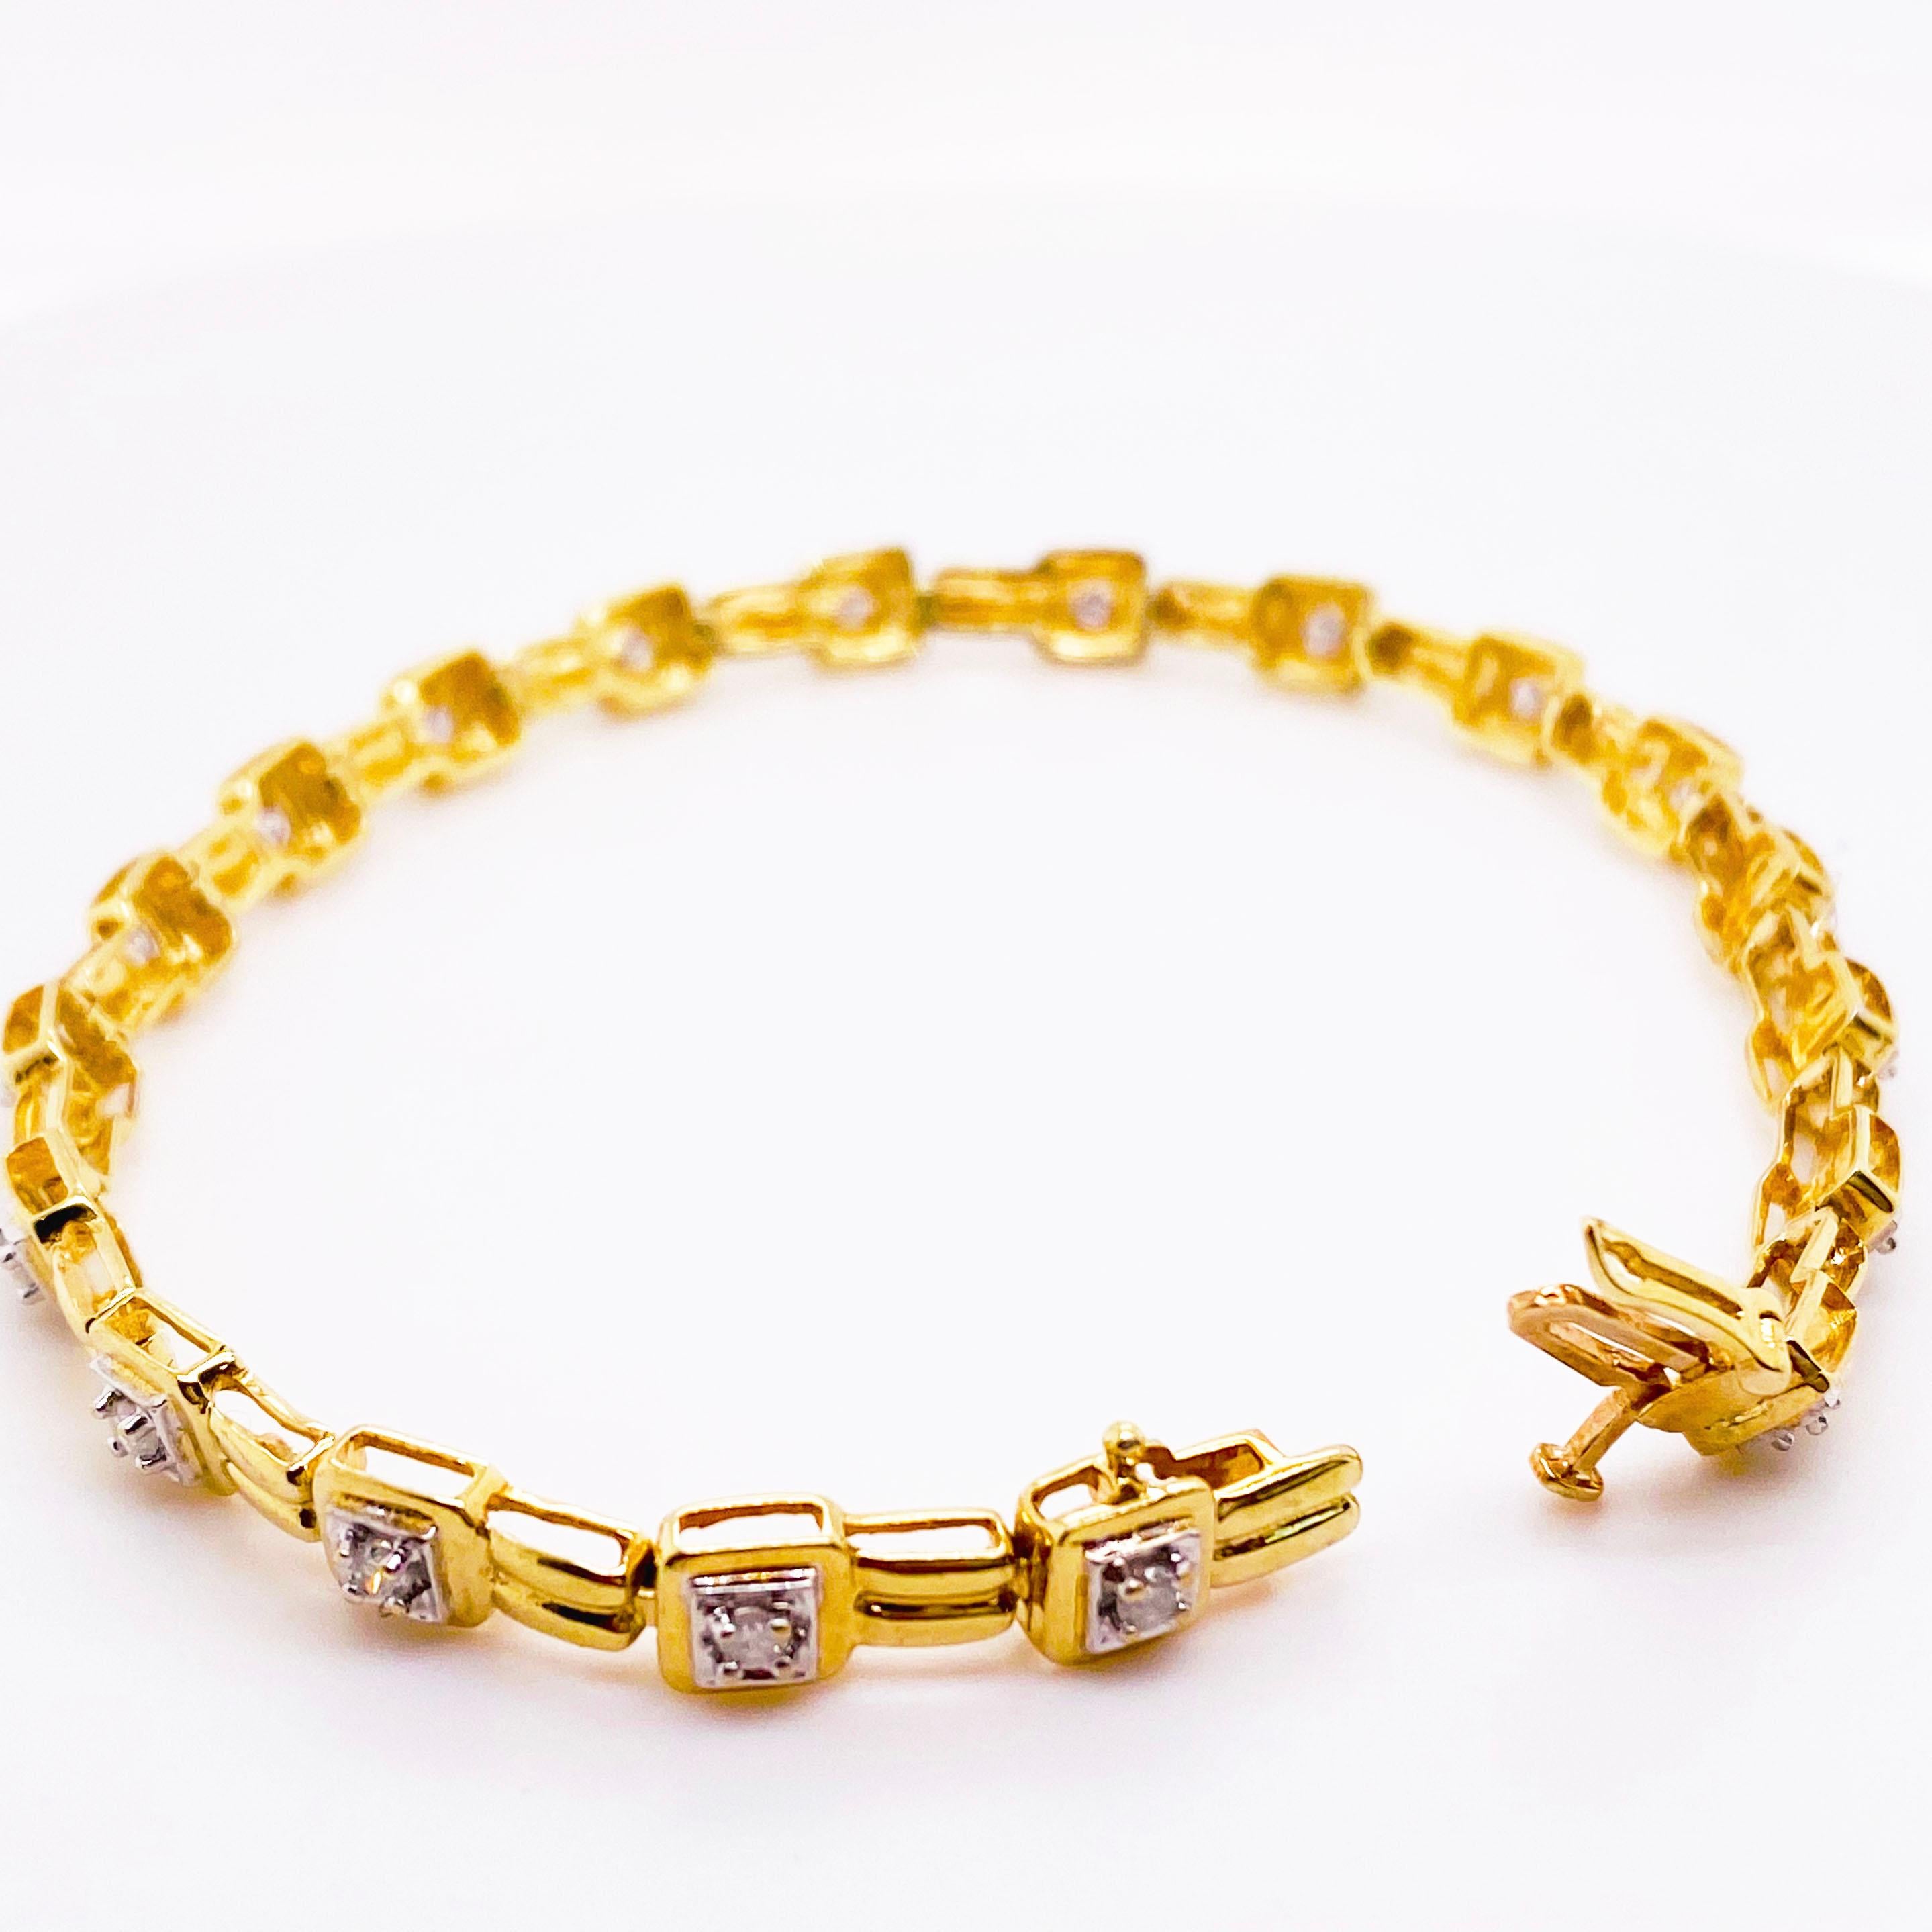 taiwan gold bracelet price